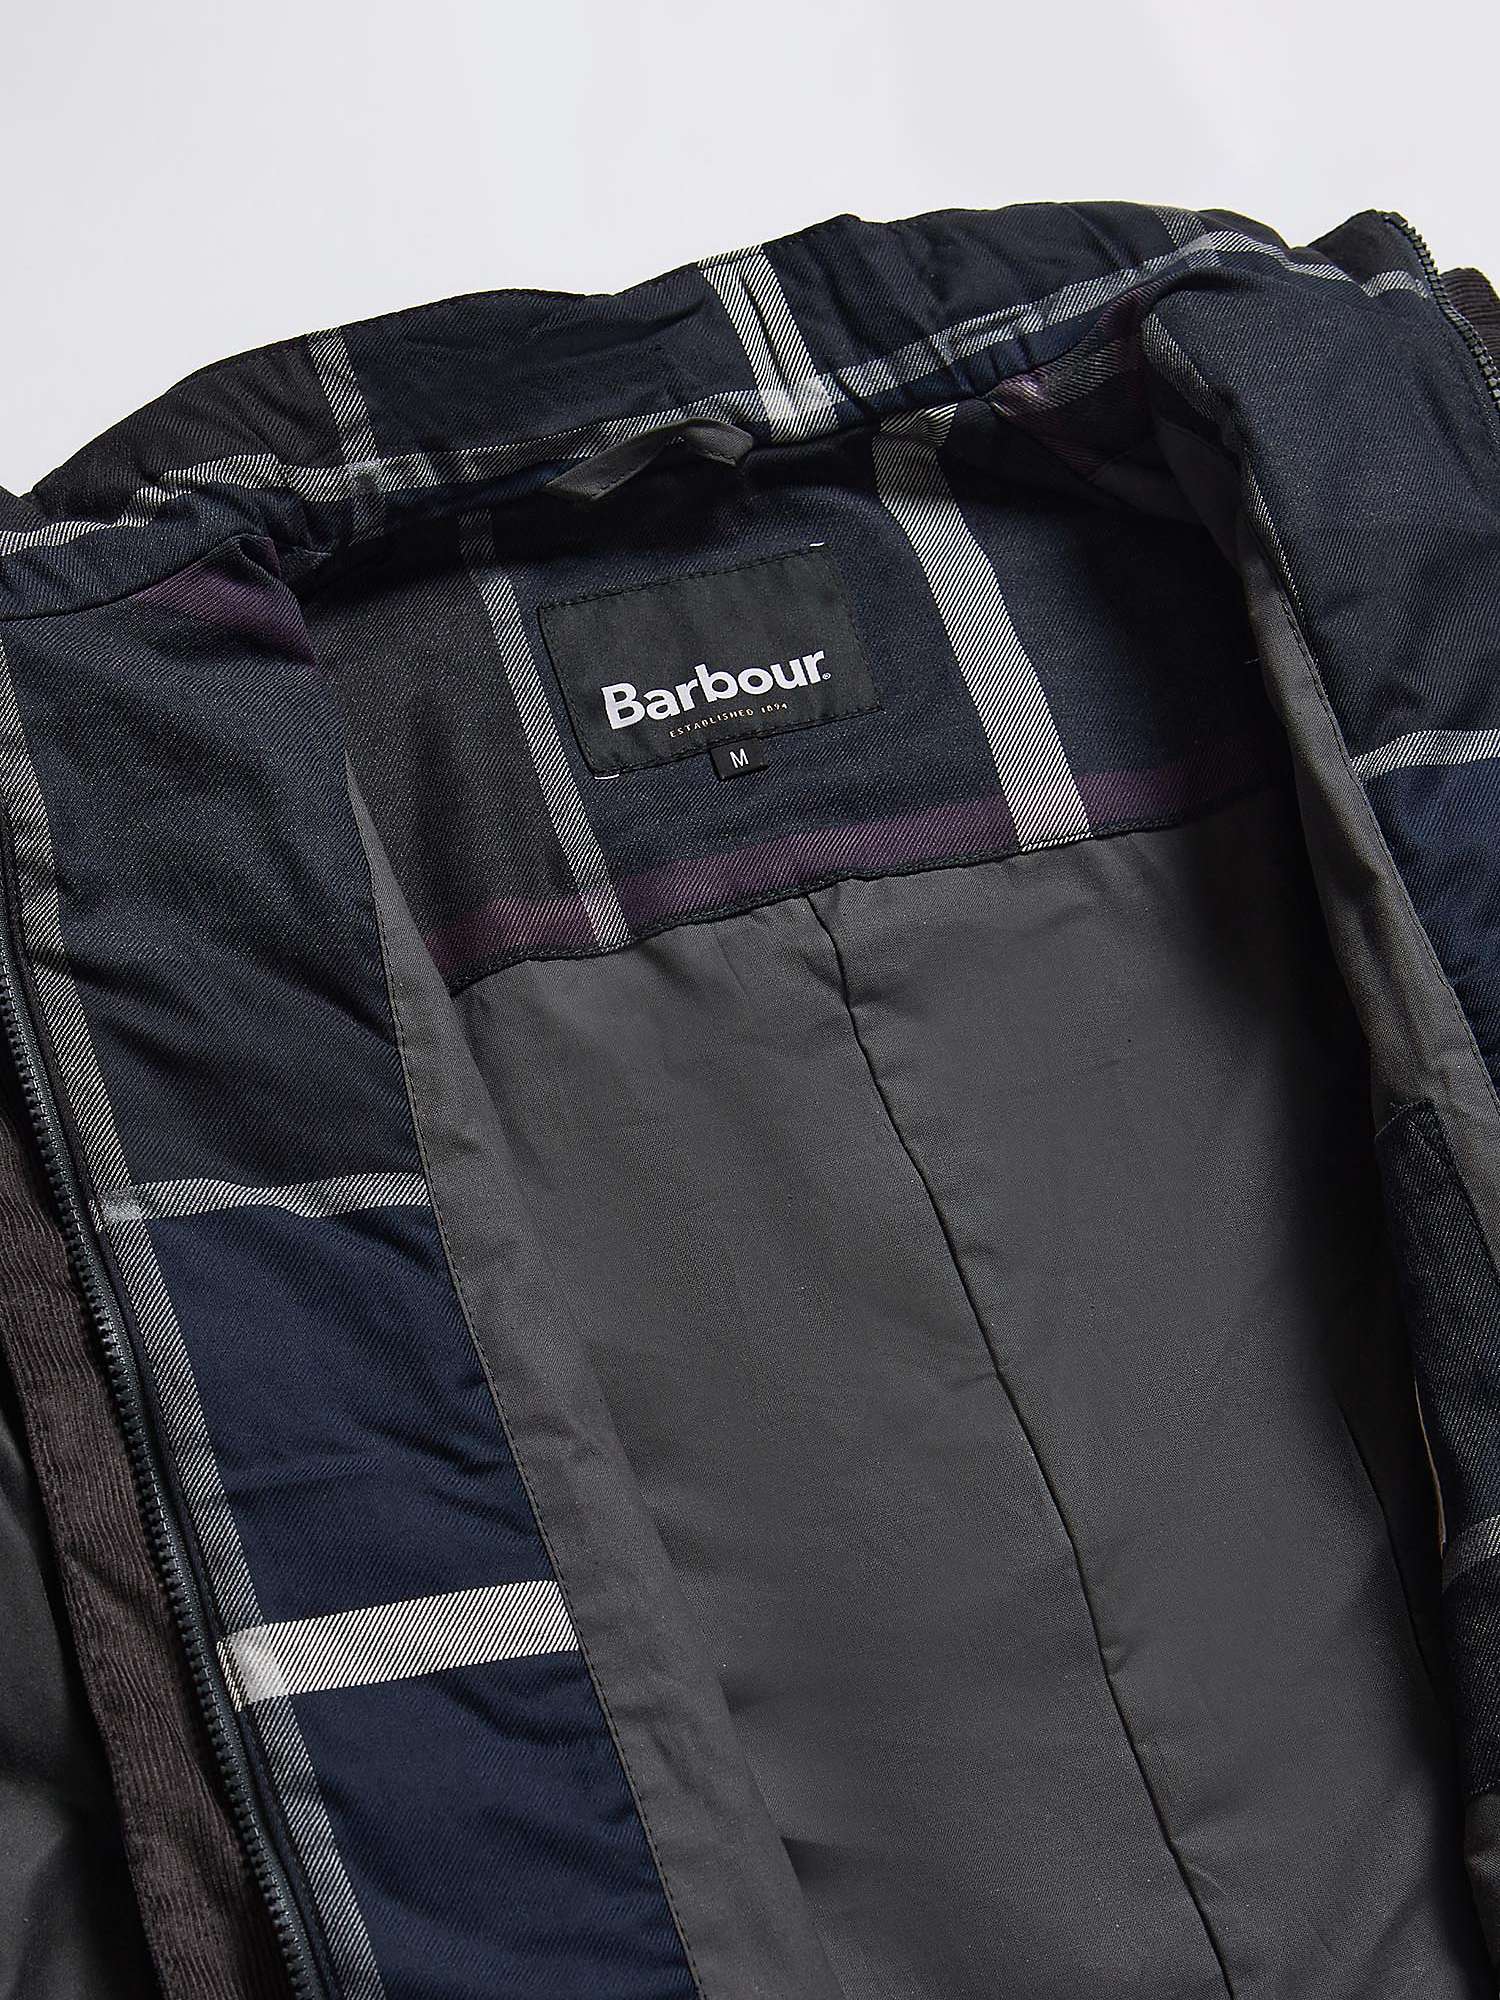 Barbour Century Wax Jacket, Grey/Black Slate at John Lewis & Partners